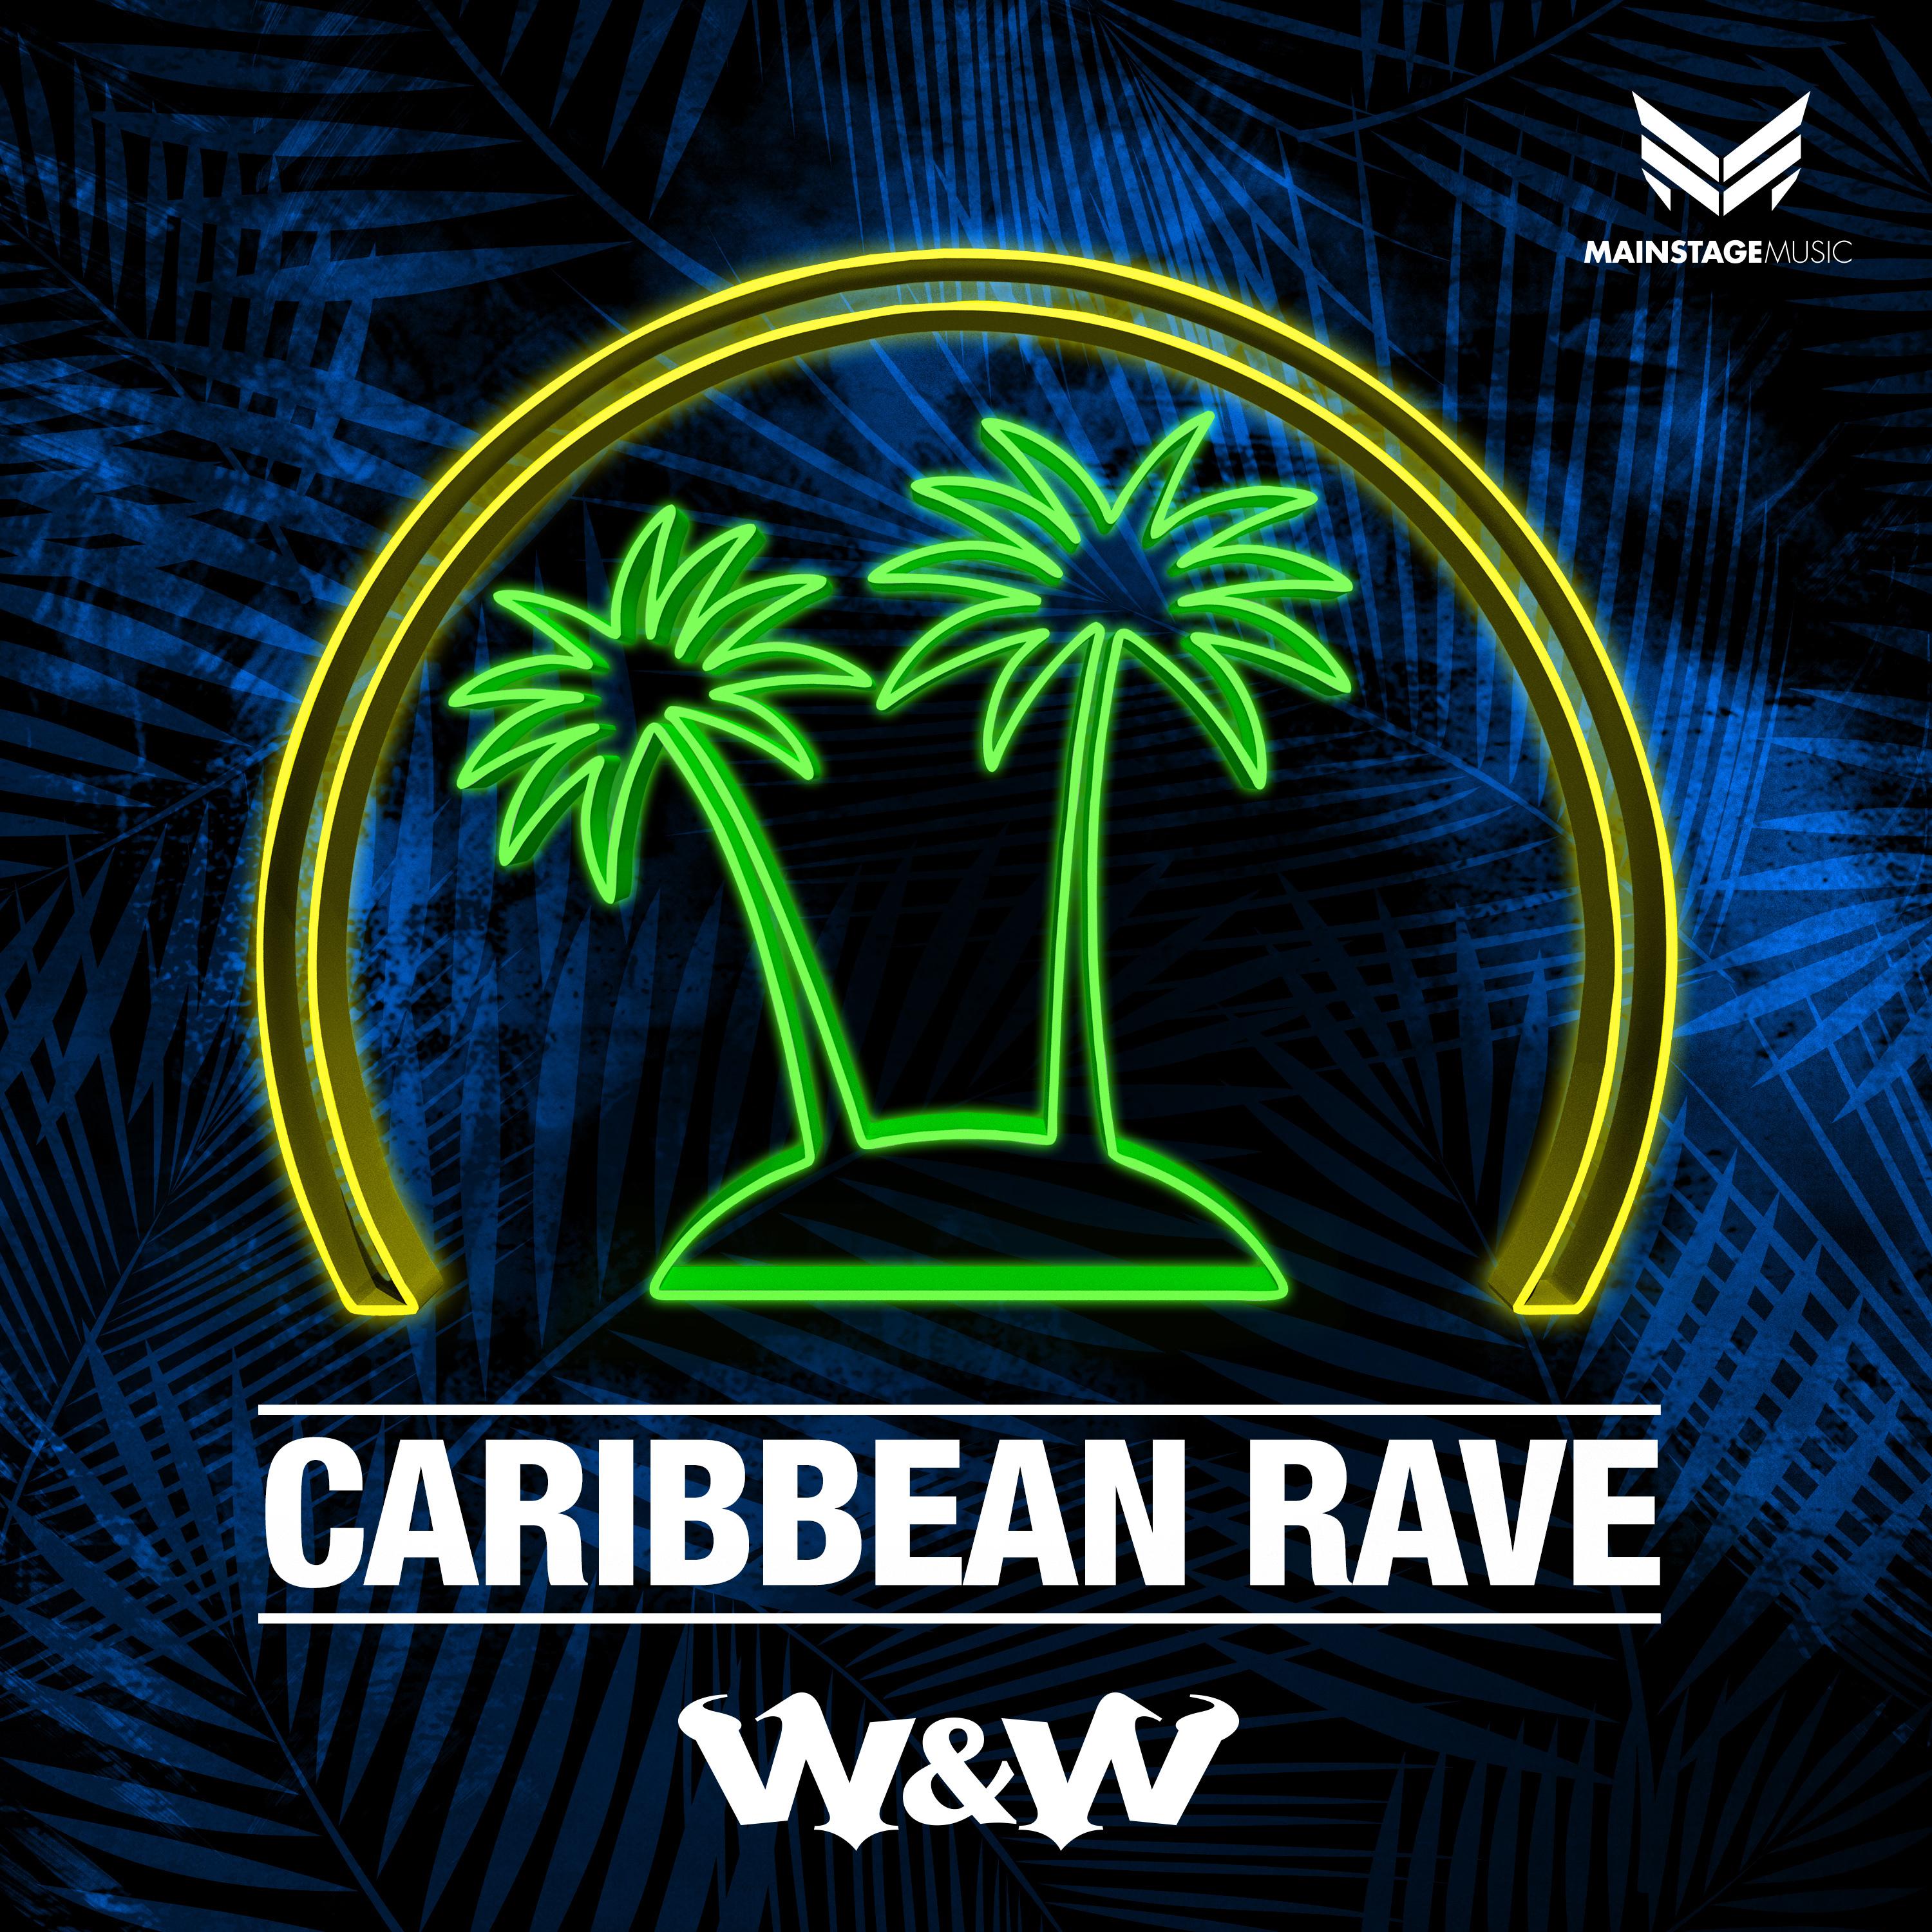 Caribbean Rave (Extended Mix)